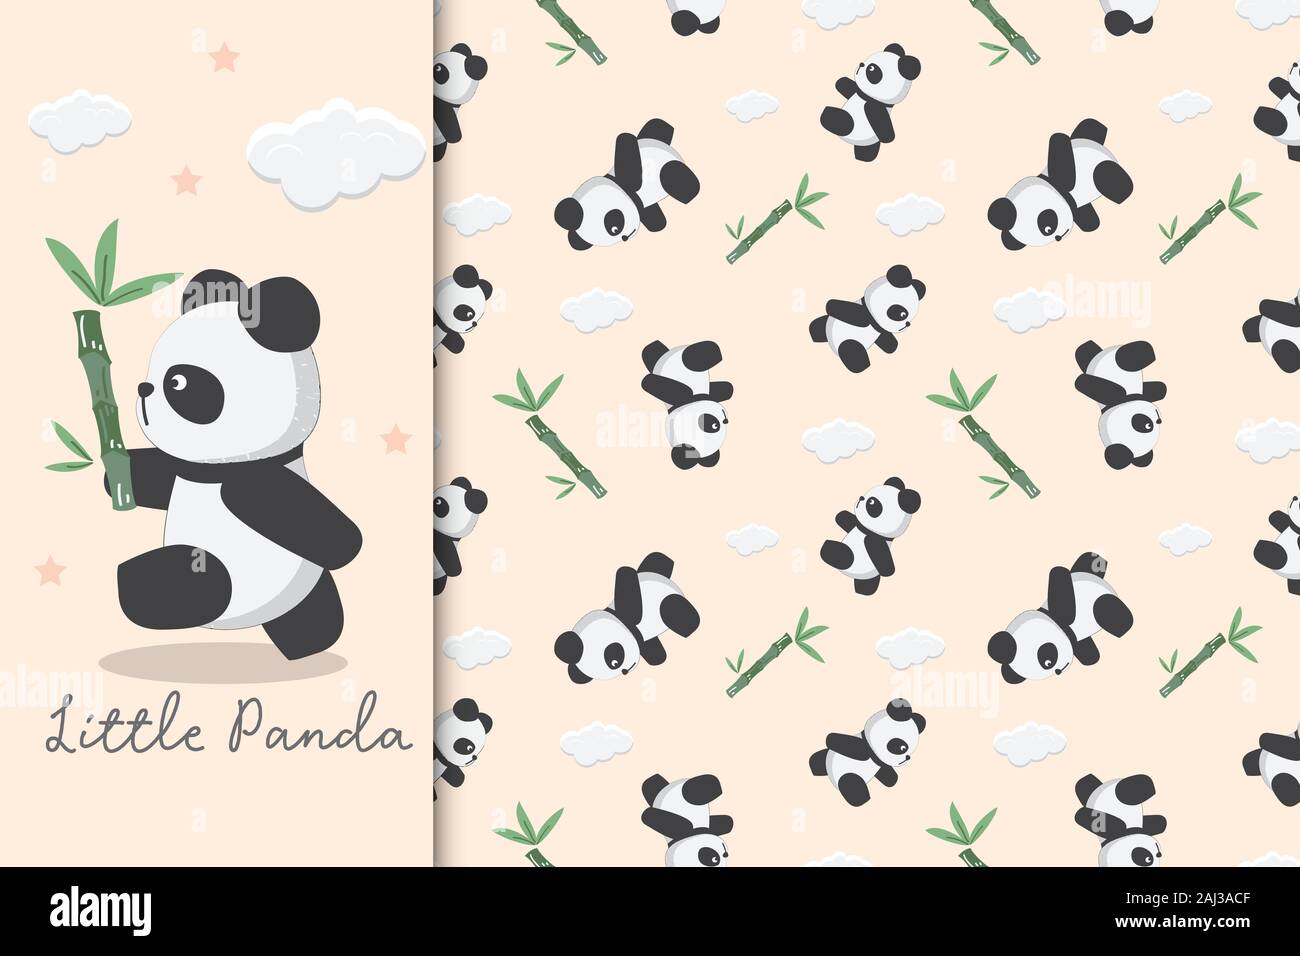 Panda wallpaper hi-res stock photography and images - Alamy